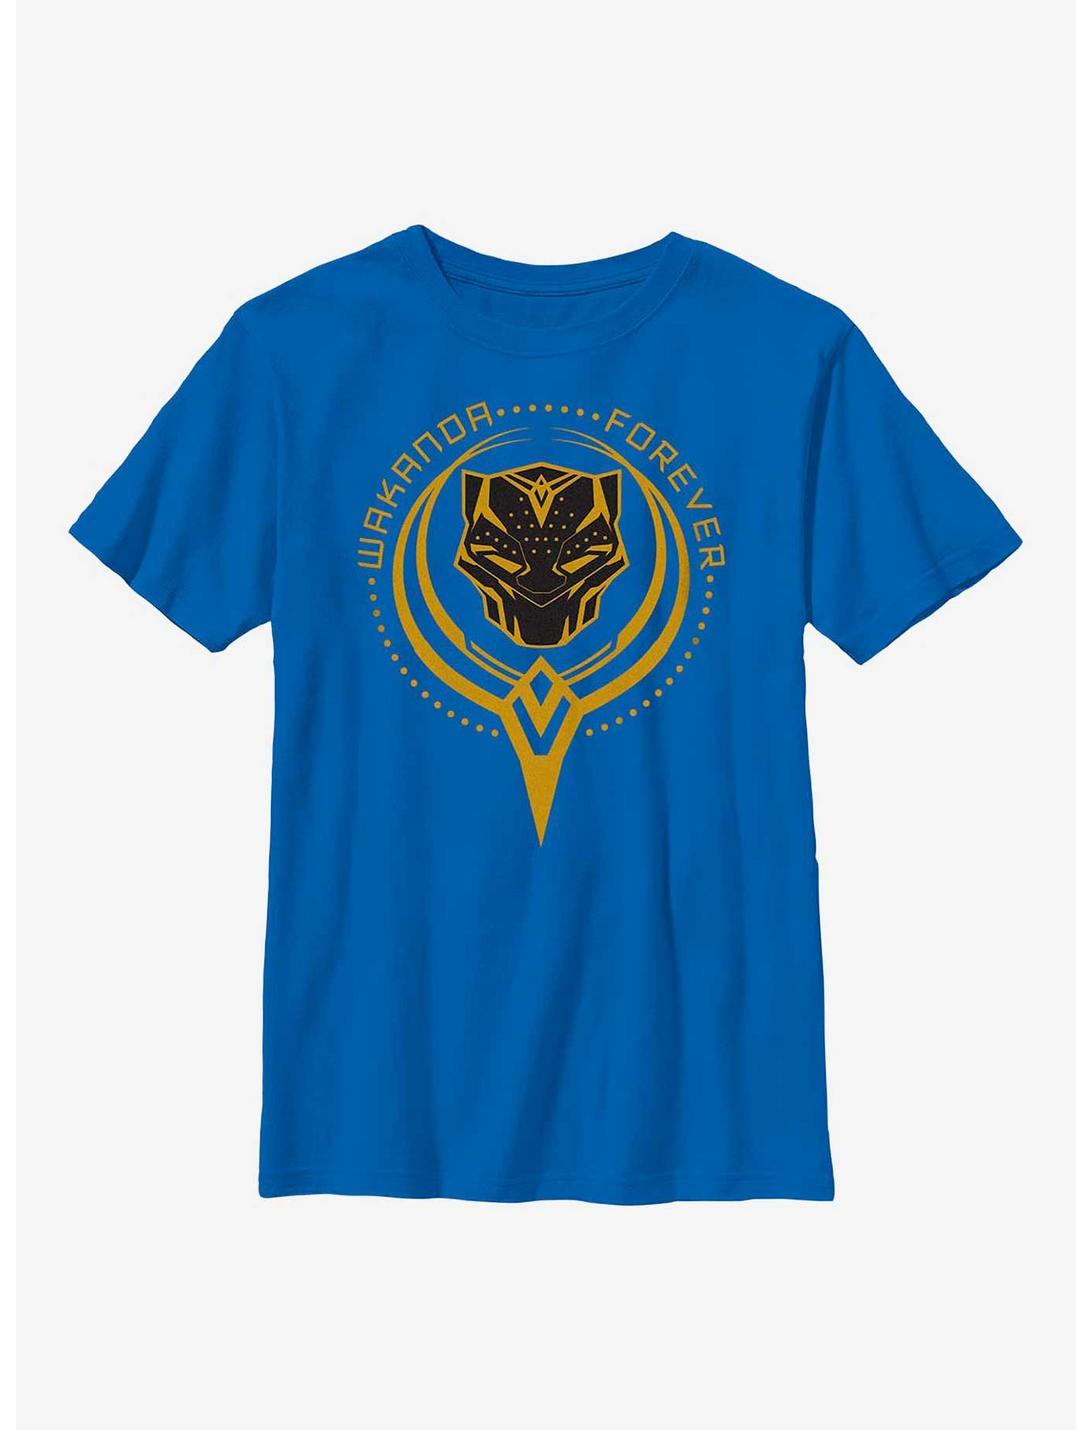 Marvel Black Panther: Wakanda Forever Golden Badge Youth T-Shirt, ROYAL, hi-res